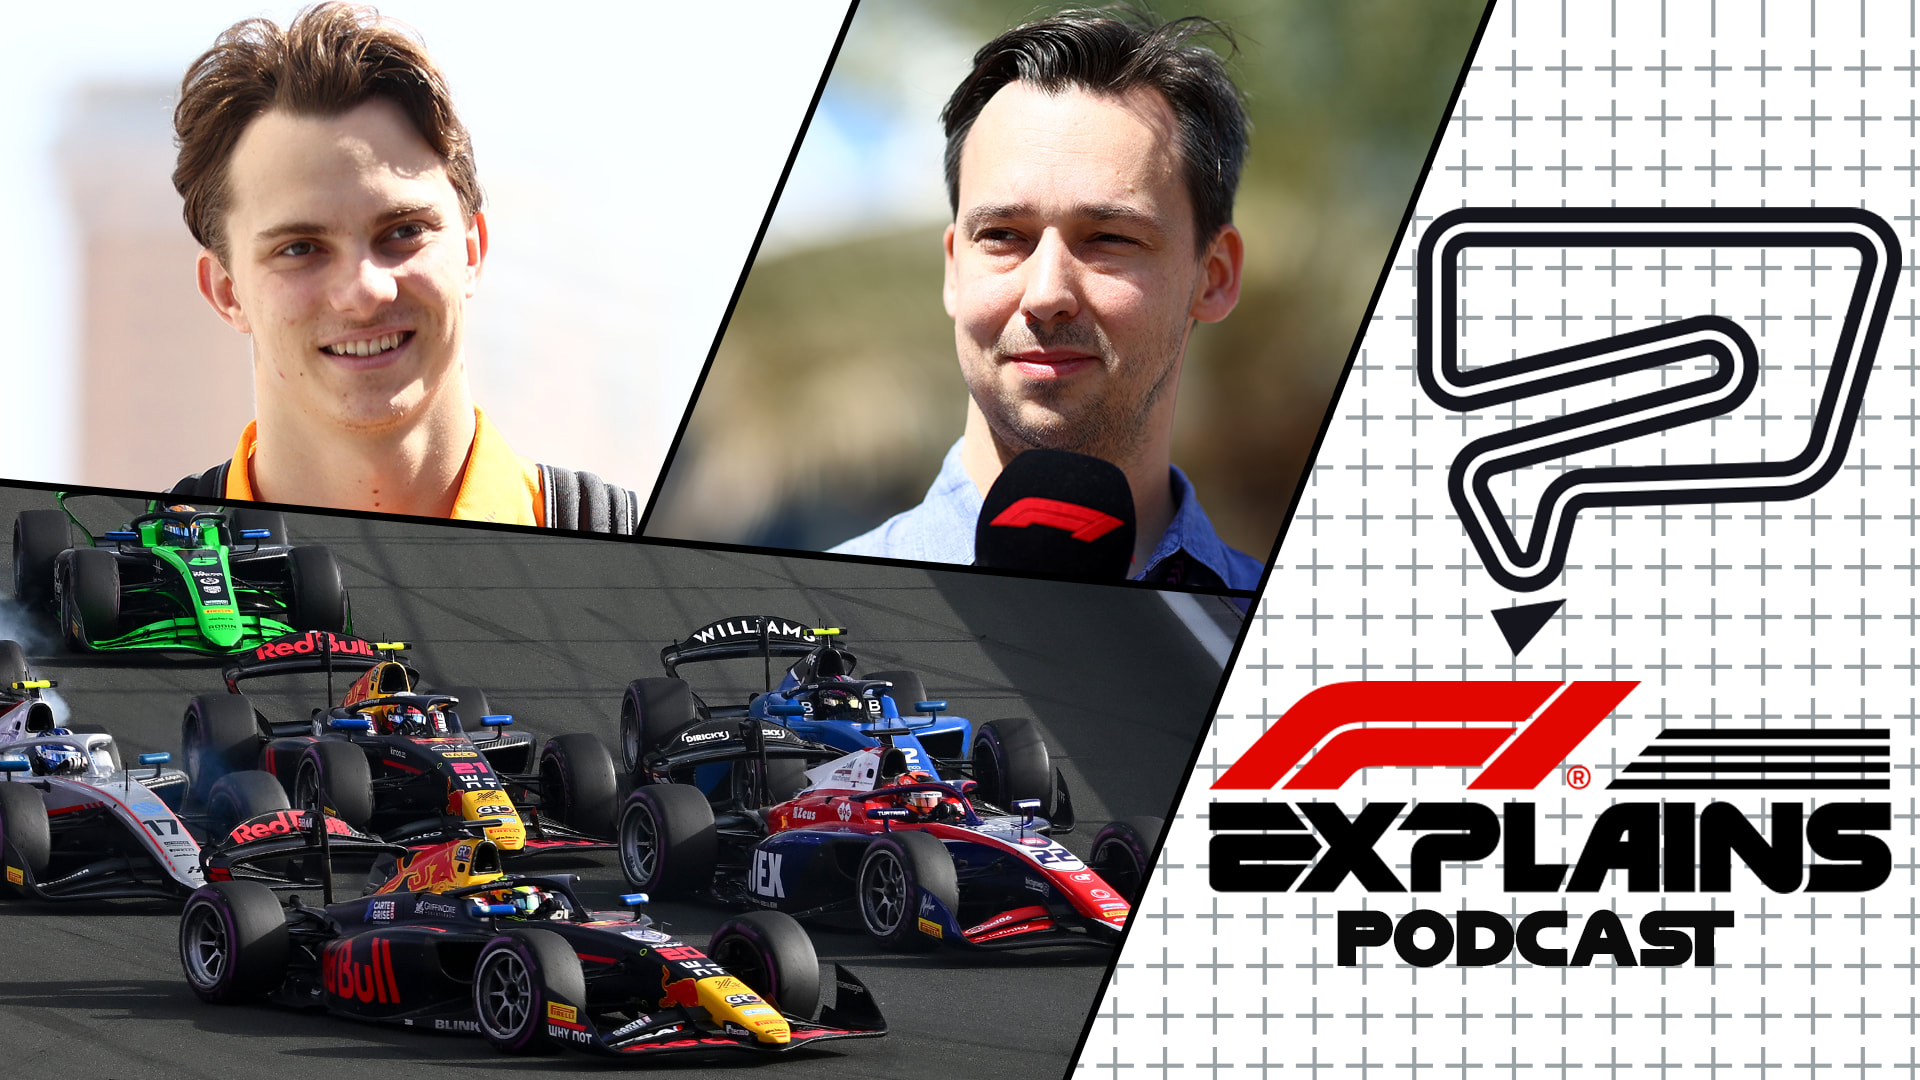 F1 EXPLAINS: Oscar Piastri and commentator Alex Ja